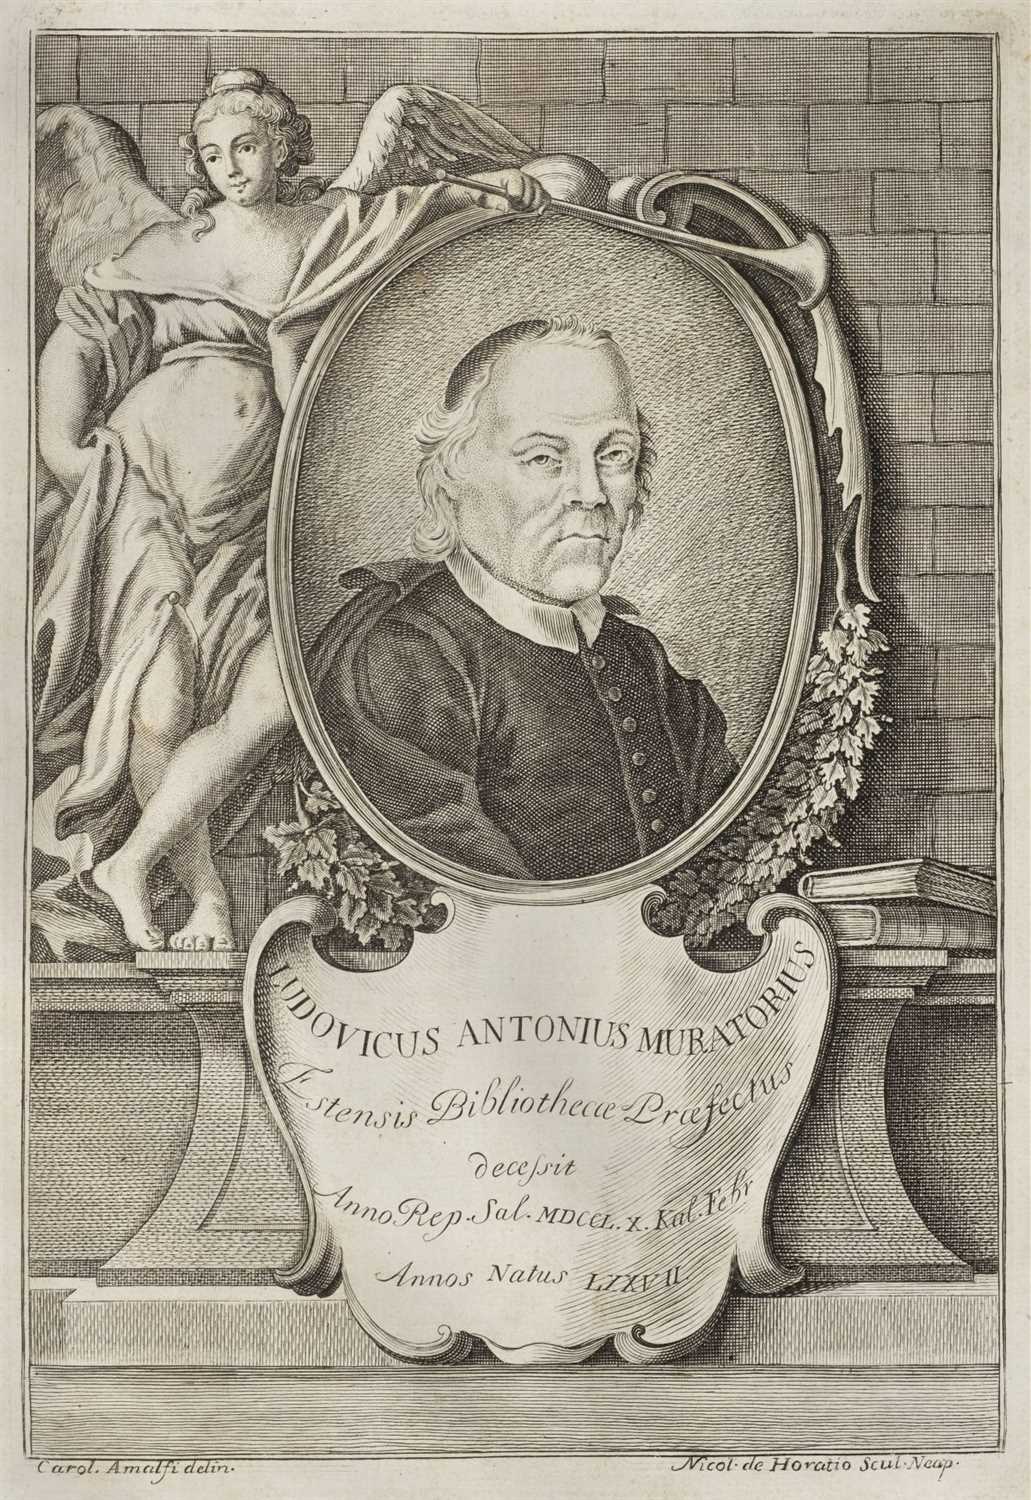 Lot 110 - Muratori (Ludovico Antonio). Dissertazioni sopra le Antichita Italiane, 3 volumes, 1752-3